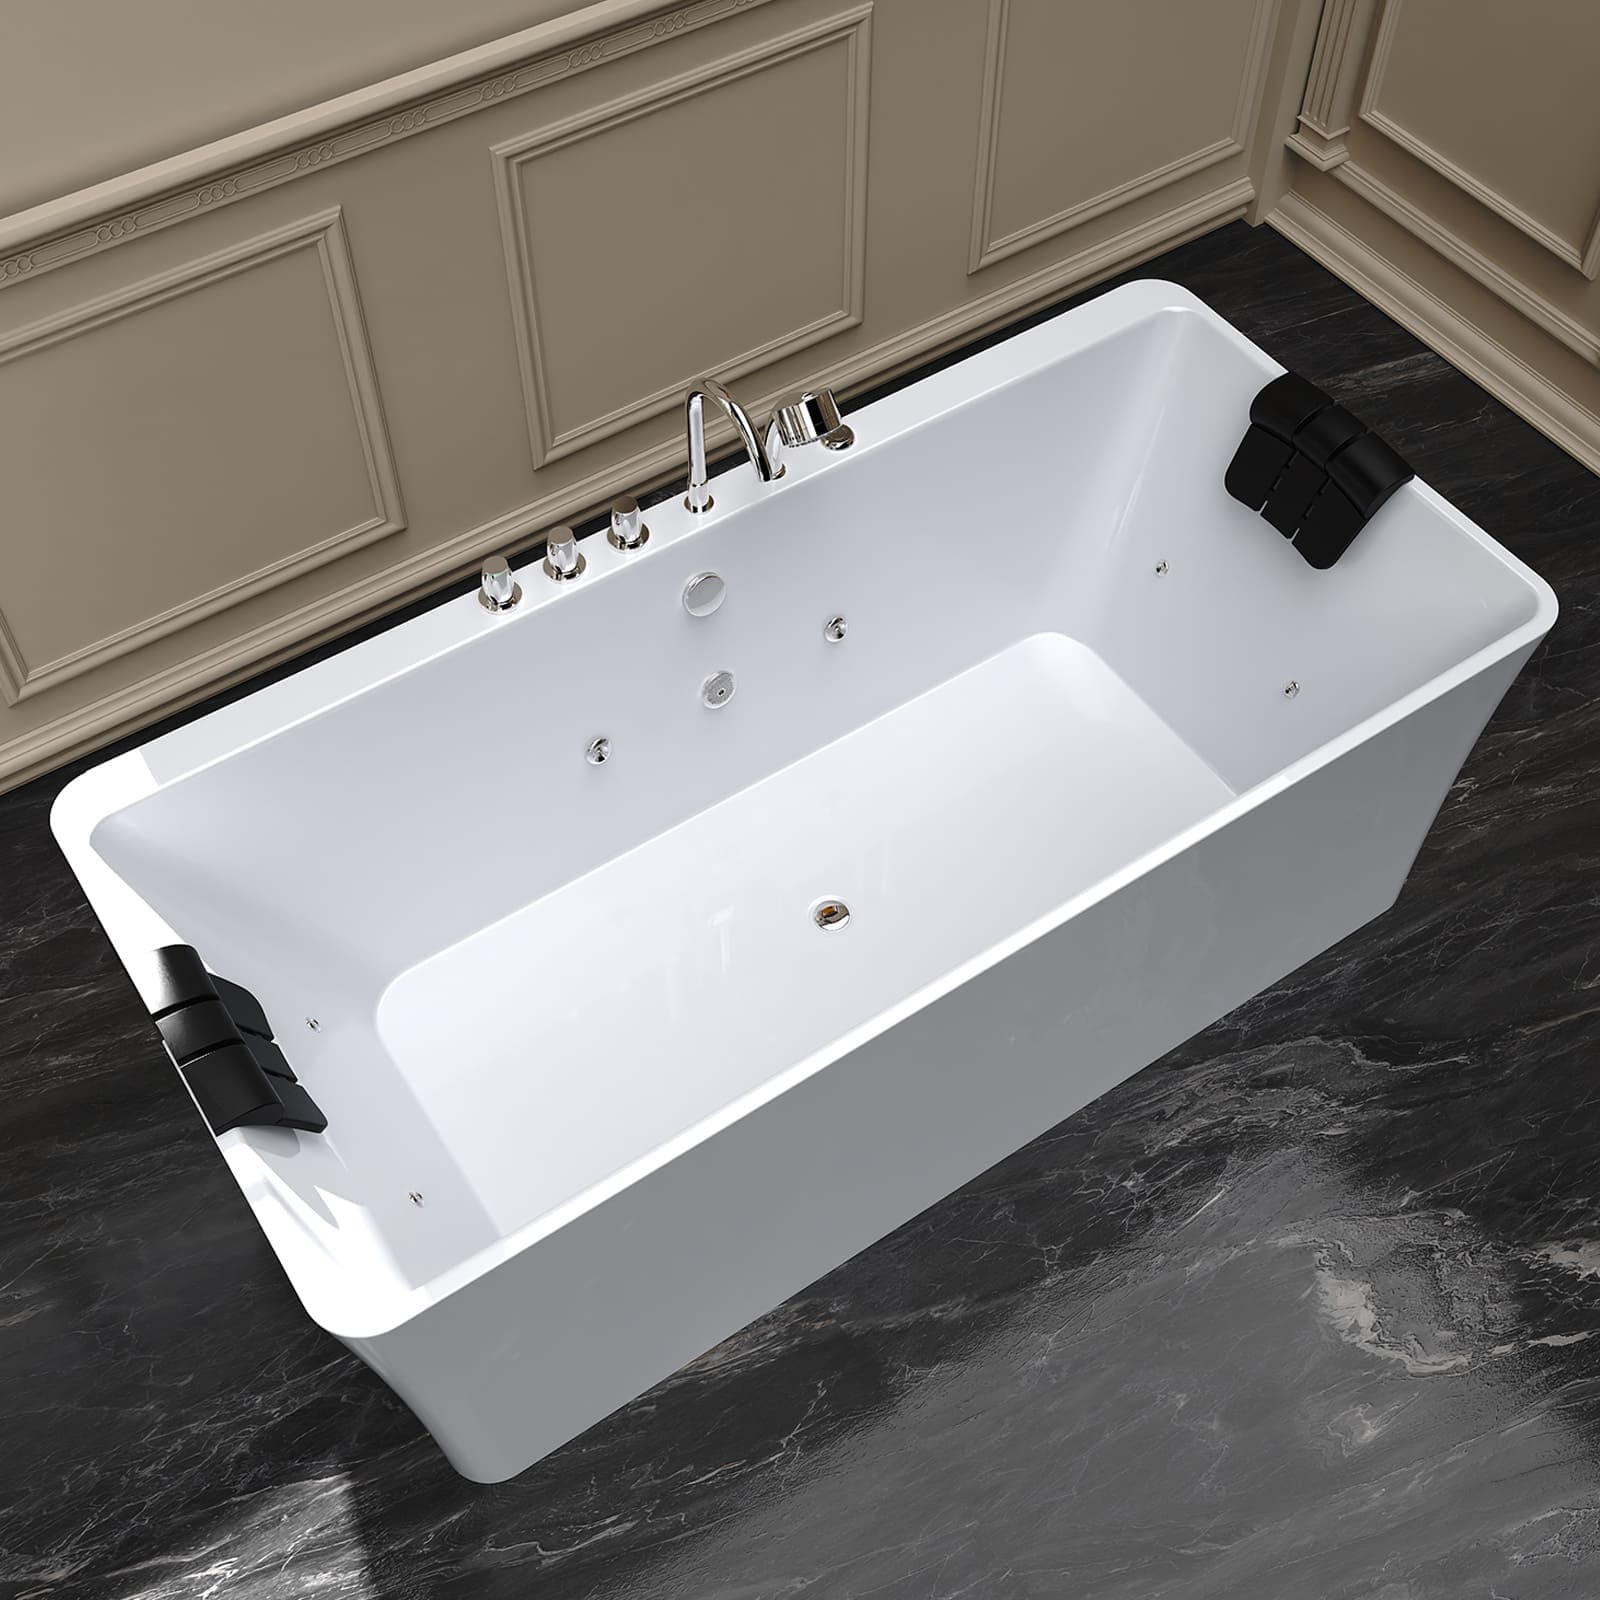 Empava-67AIS03 whirlpool acrylic hydromassage rectangular double-ended bathtub side